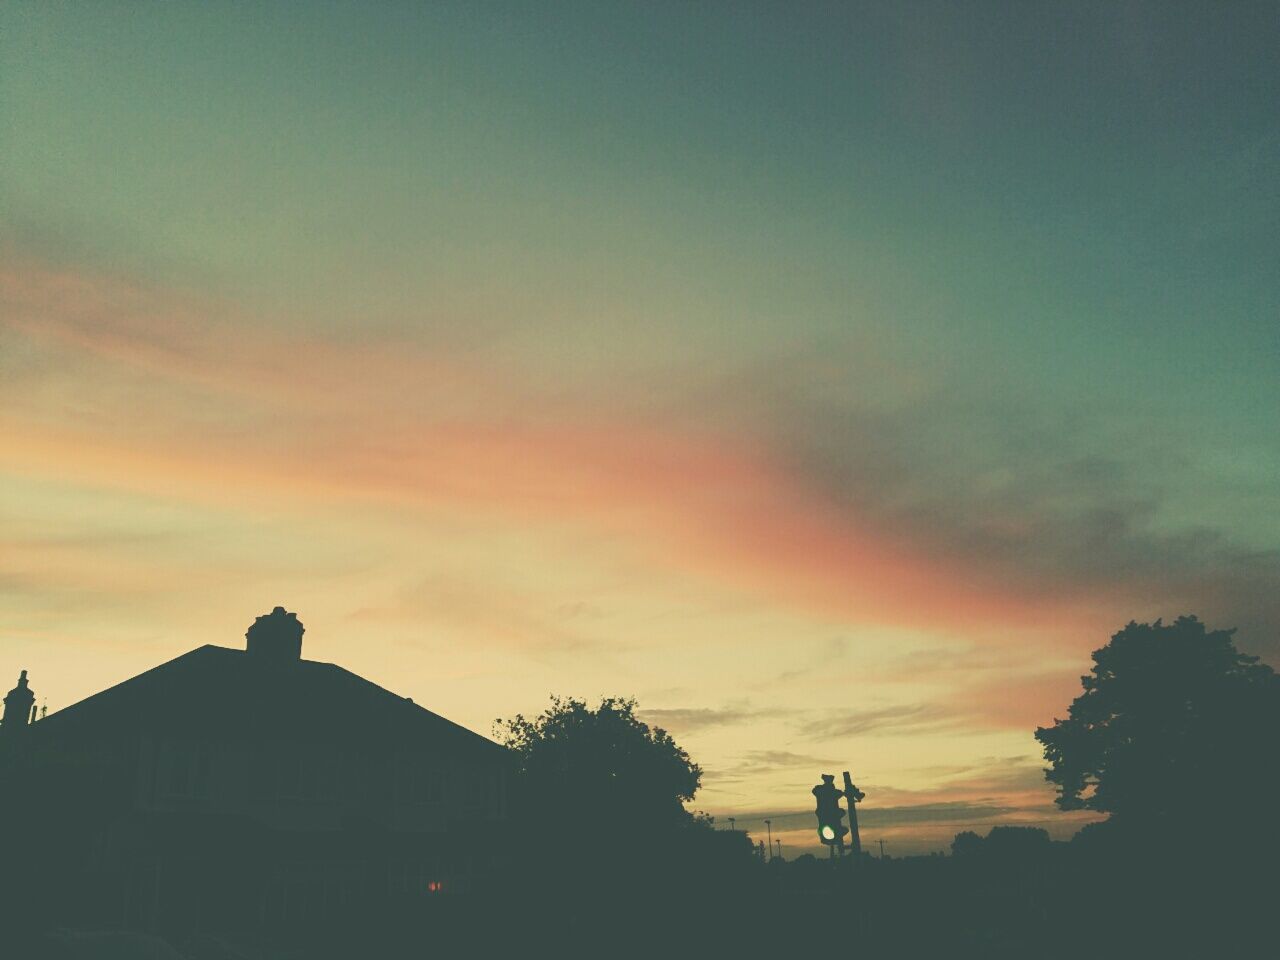 Silhouette house against sunset sky